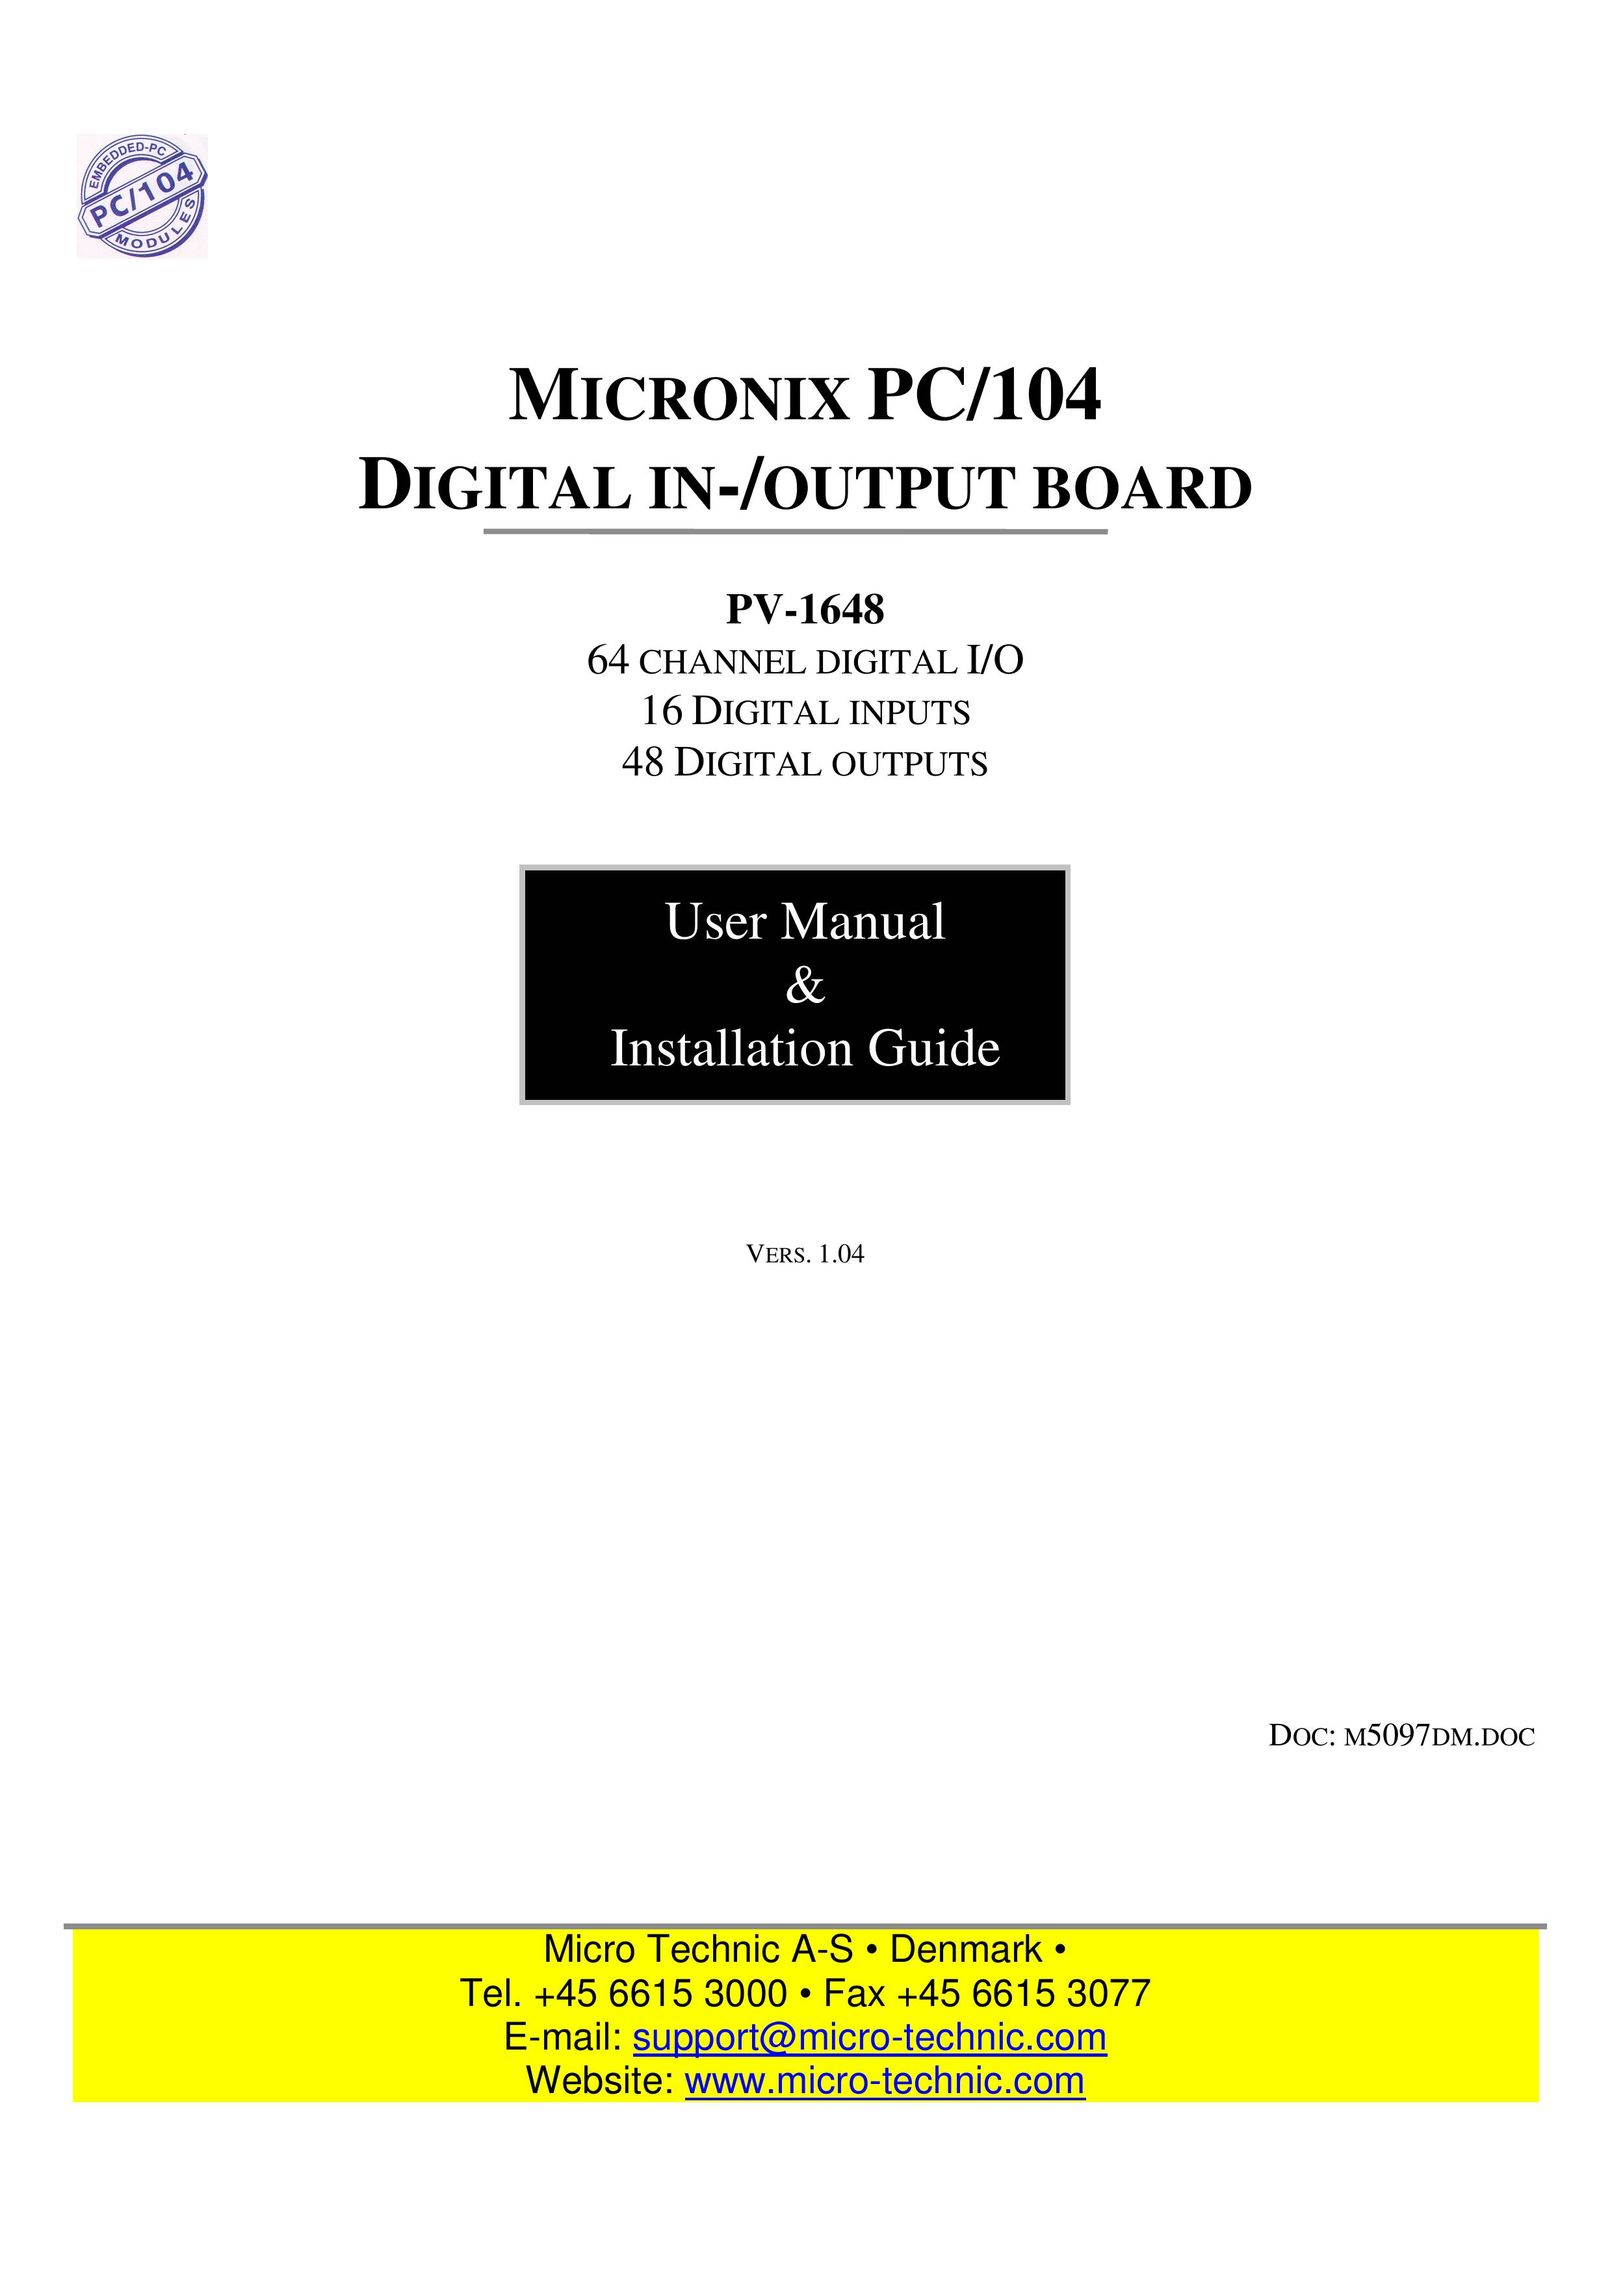 Micro Technic PV-1648 Network Card User Manual